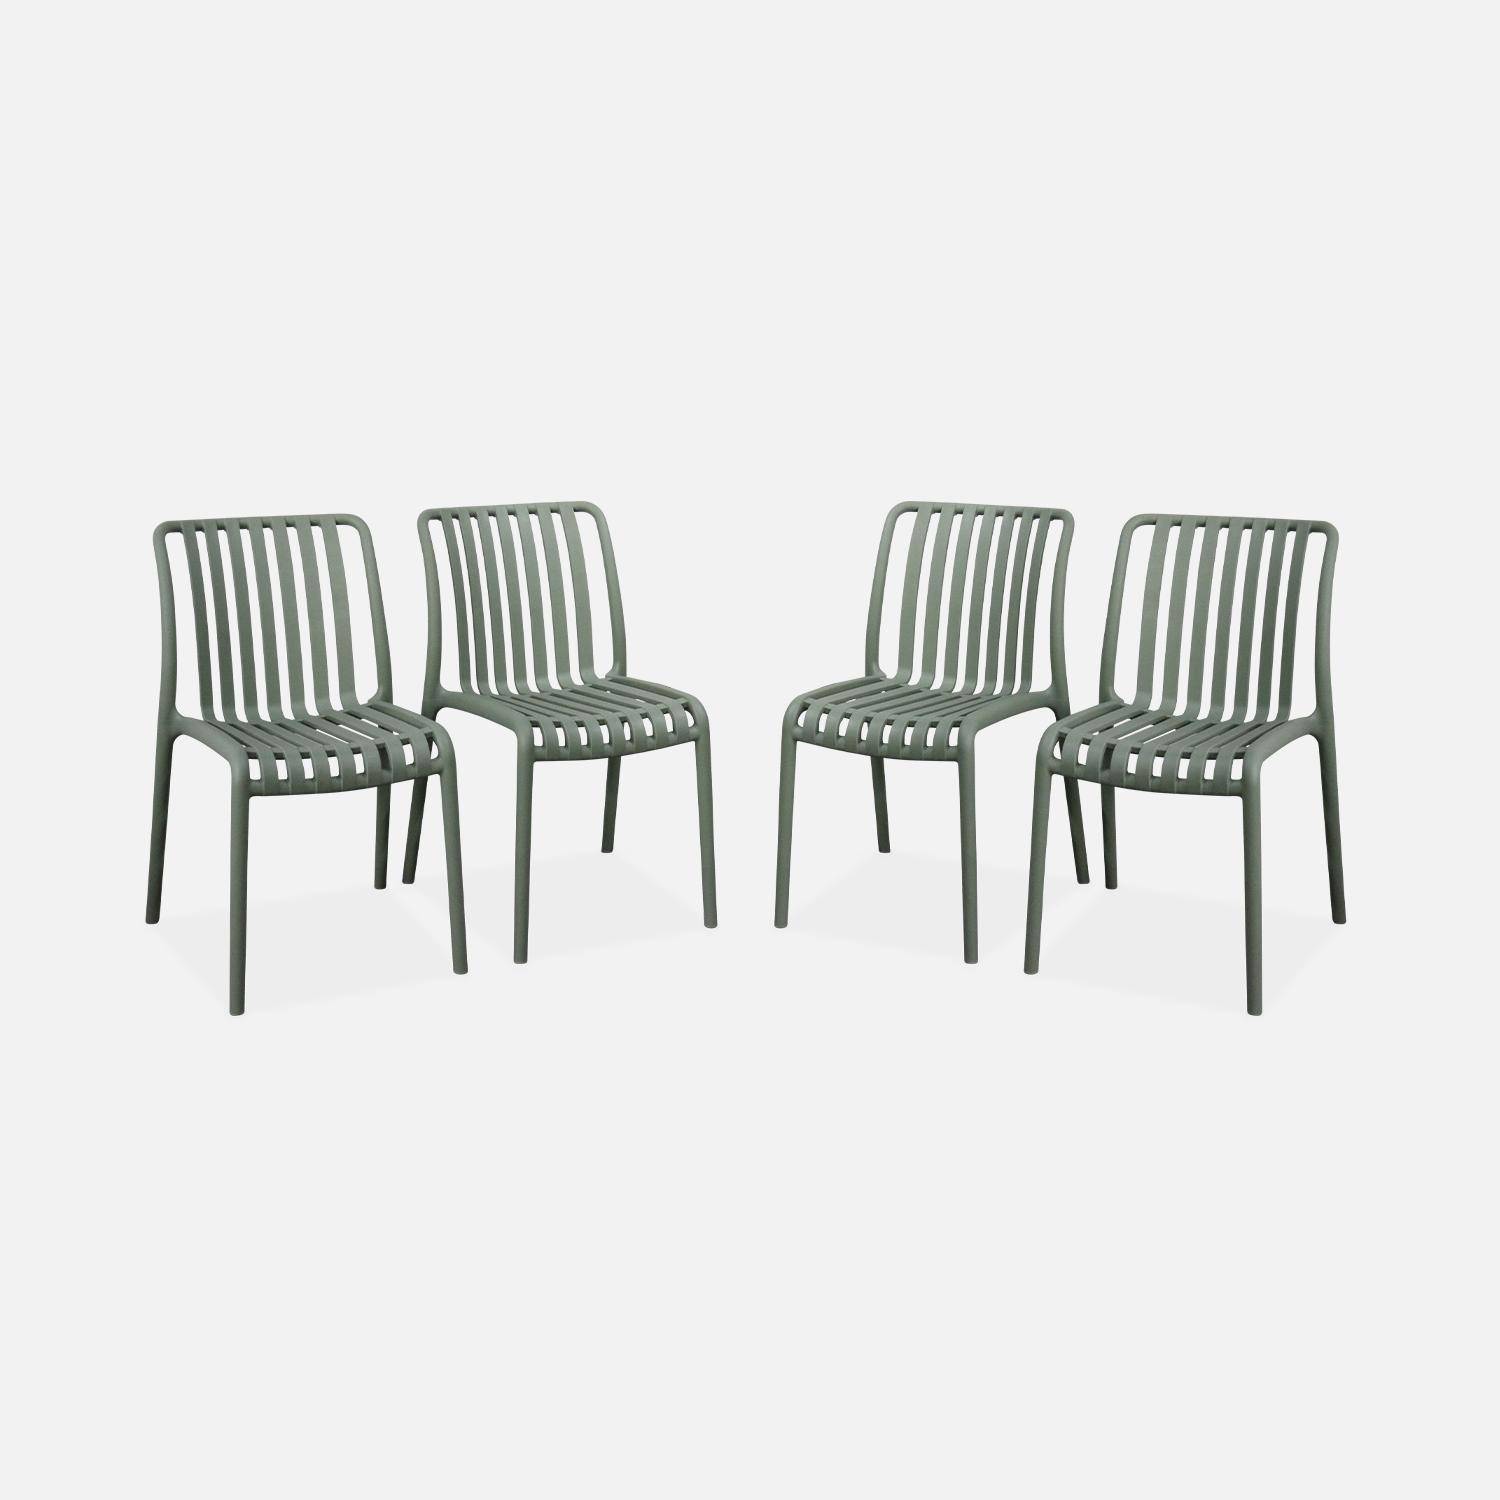 4er Set Gartenstühle aus graugrünem Kunststoff, stapelbar, bereits montiert - Agathe Photo1